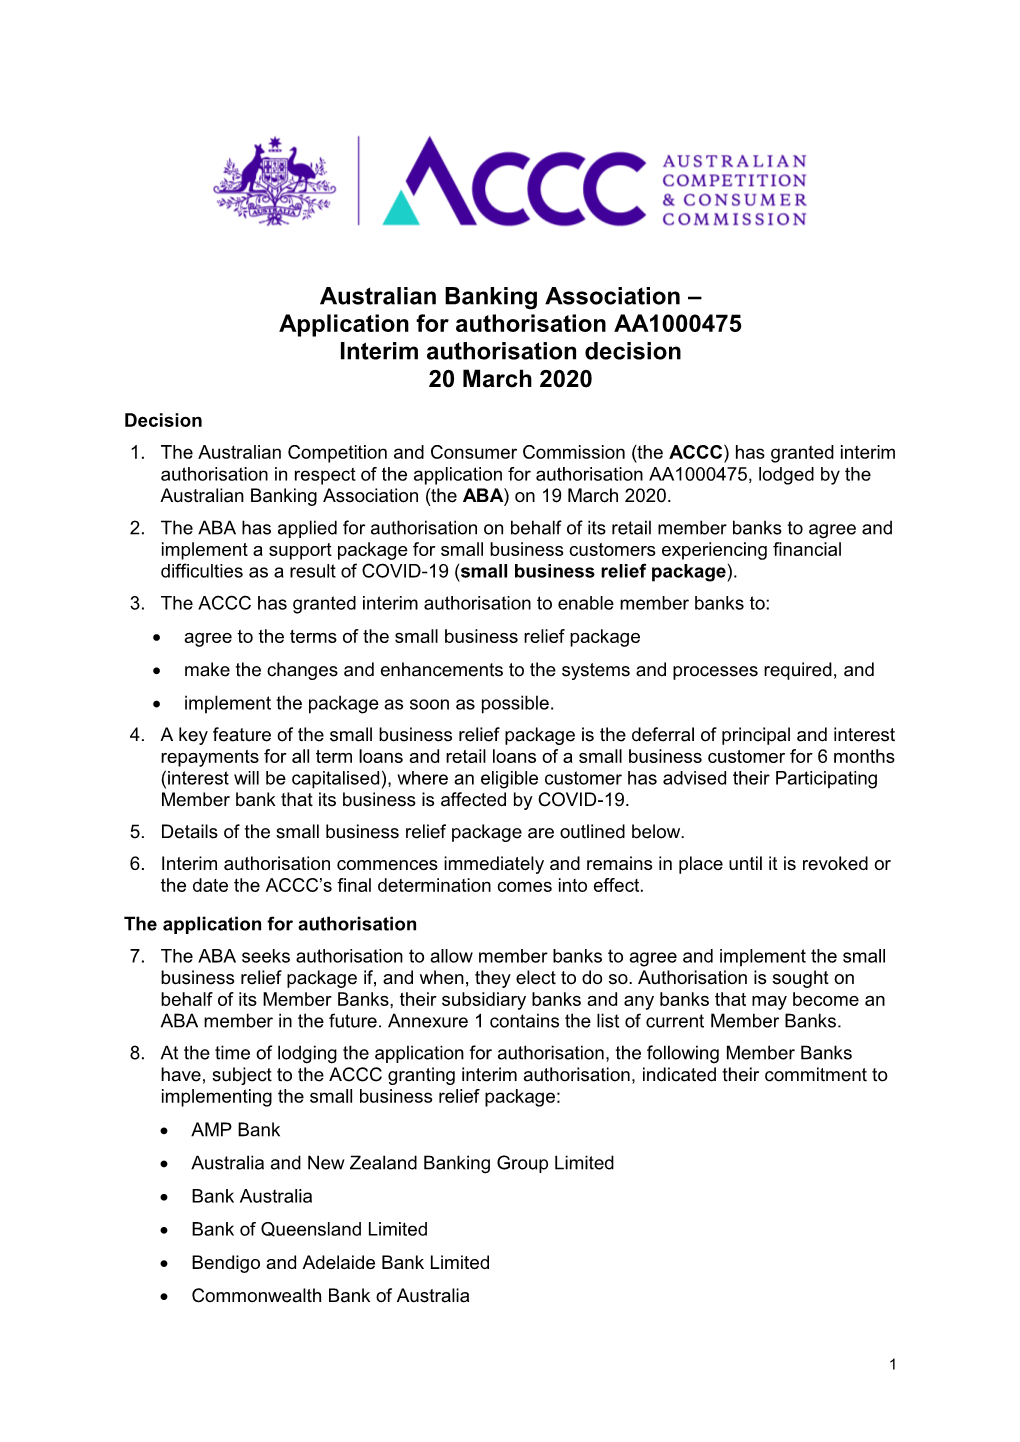 Australian Banking Association – Application for Authorisation AA1000475 Interim Authorisation Decision 20 March 2020